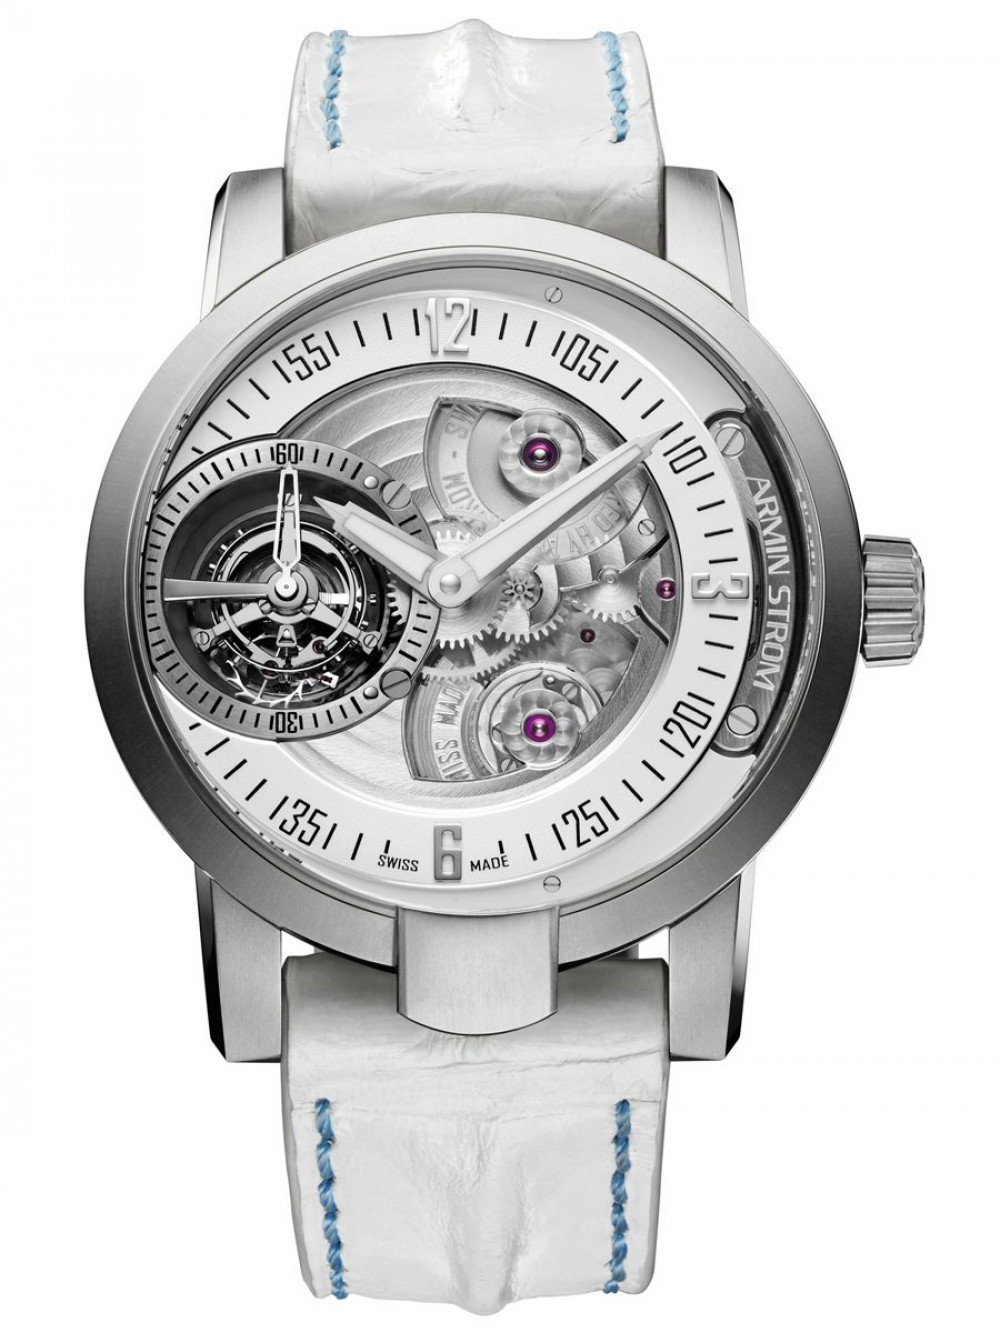 Zegarek firmy Armin Strom, model Tourbillon Gravity Air